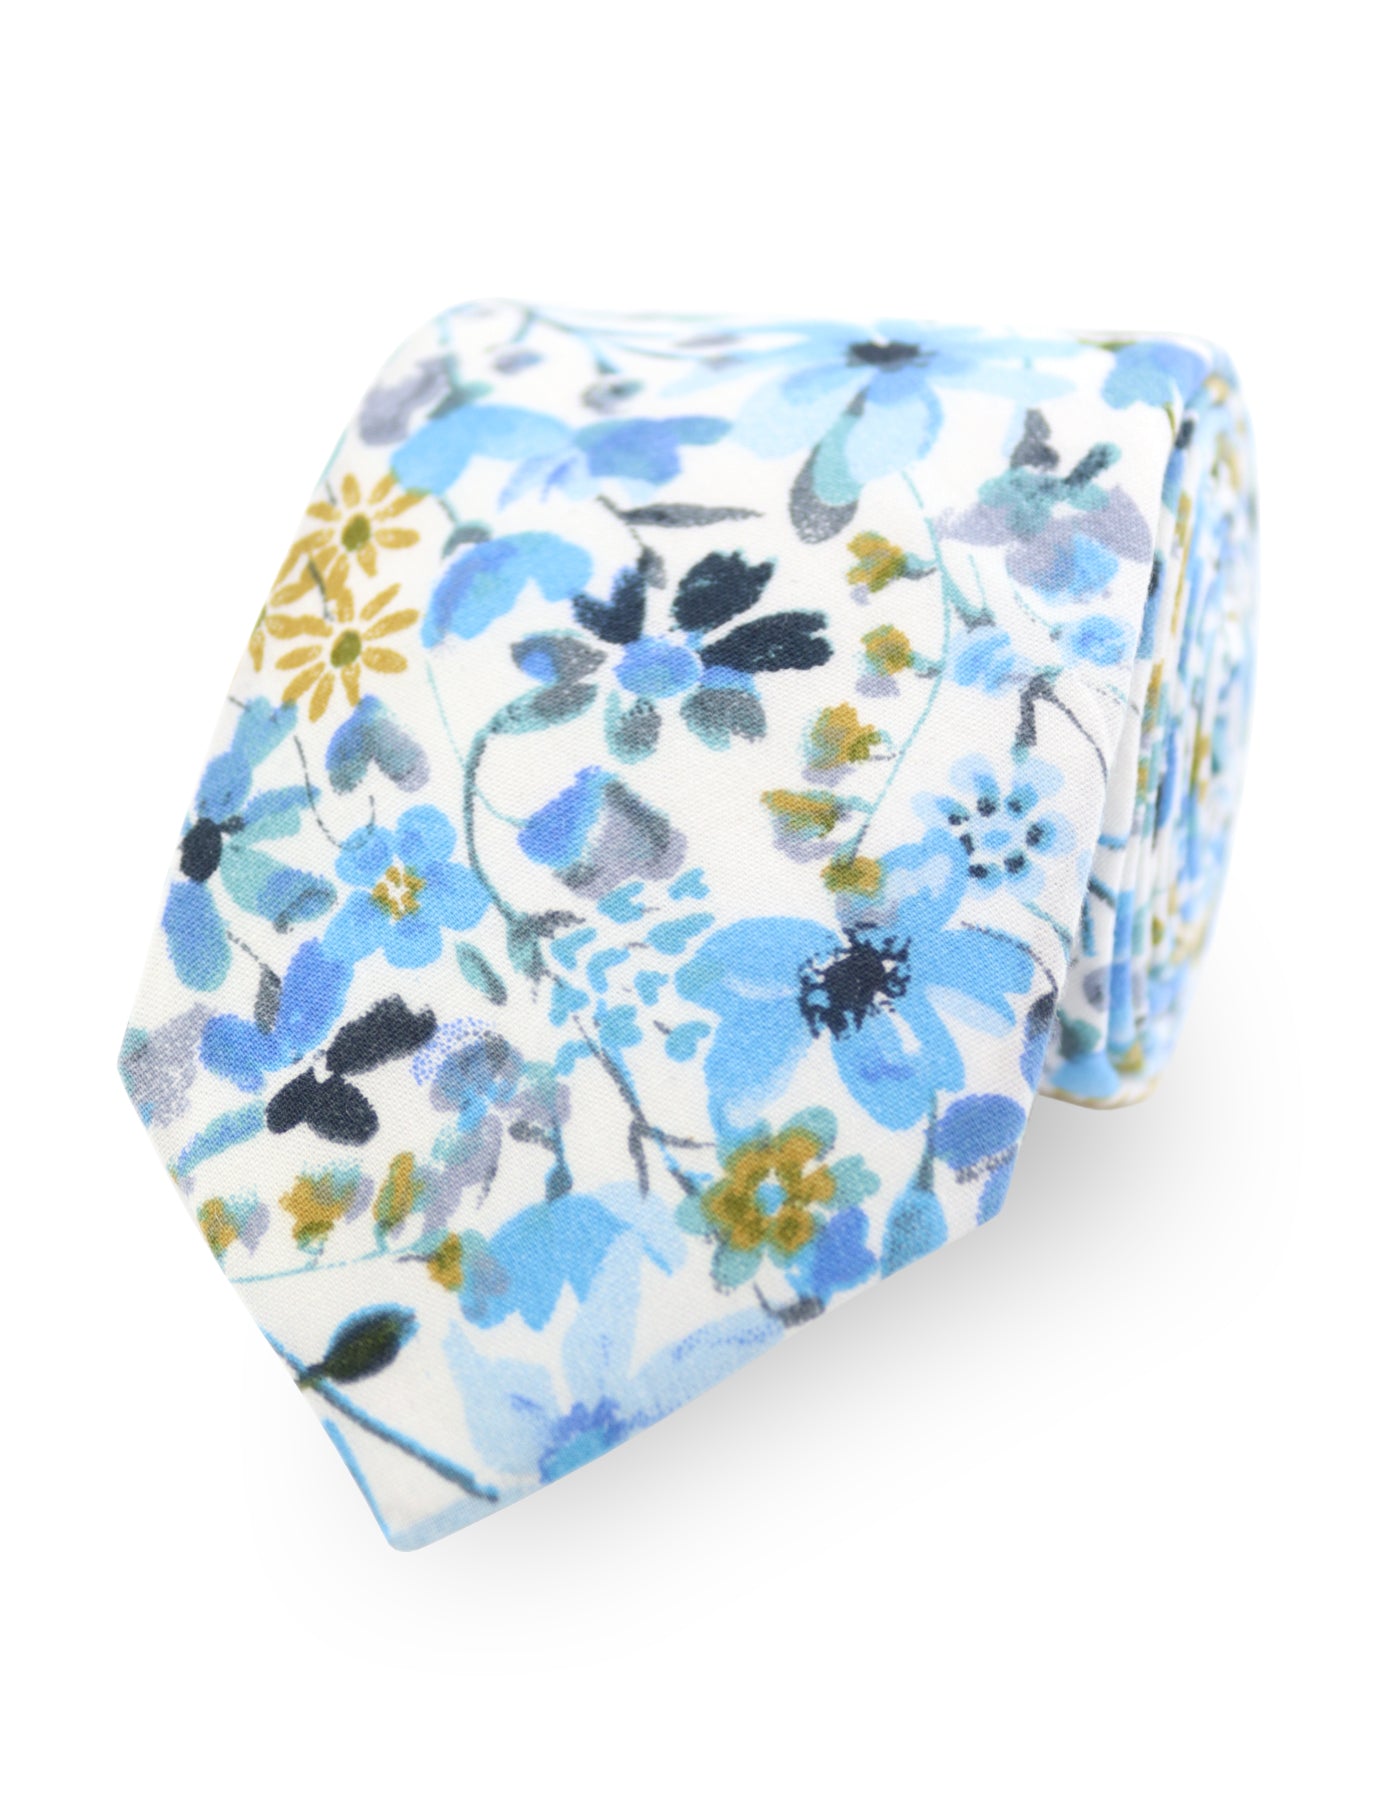 100% Cotton Floral Print Tie - Blue & Yellow